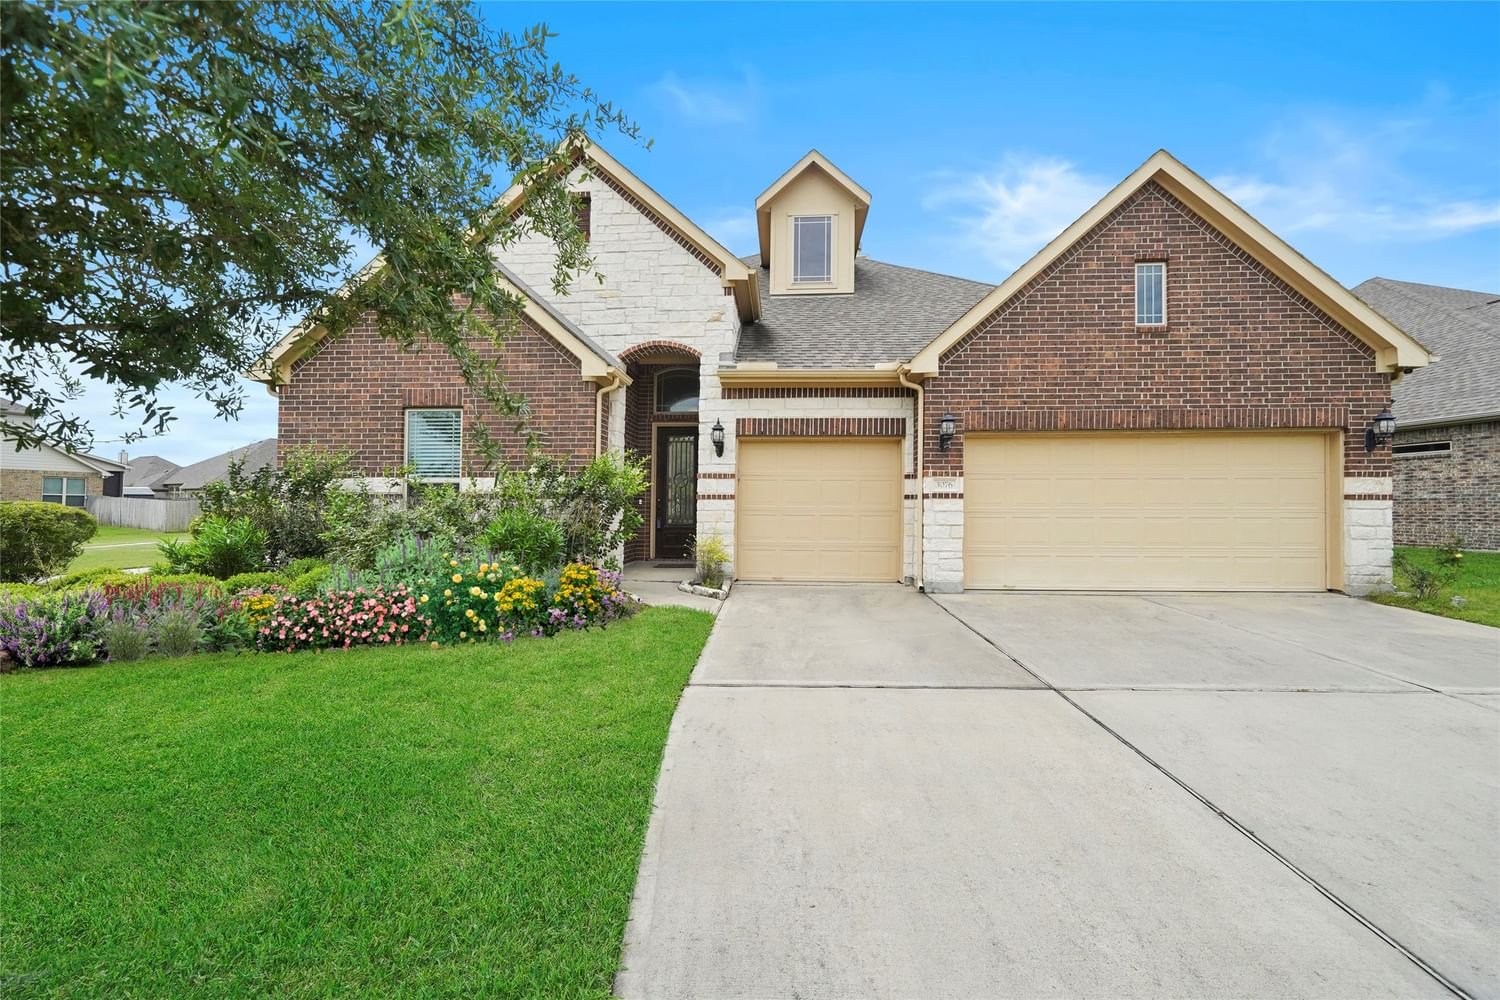 Real estate property located at 3076 Tradinghouse Creek, Galveston, Hidden Lakes Sec 4 Ph 1b 2014, League City, TX, US